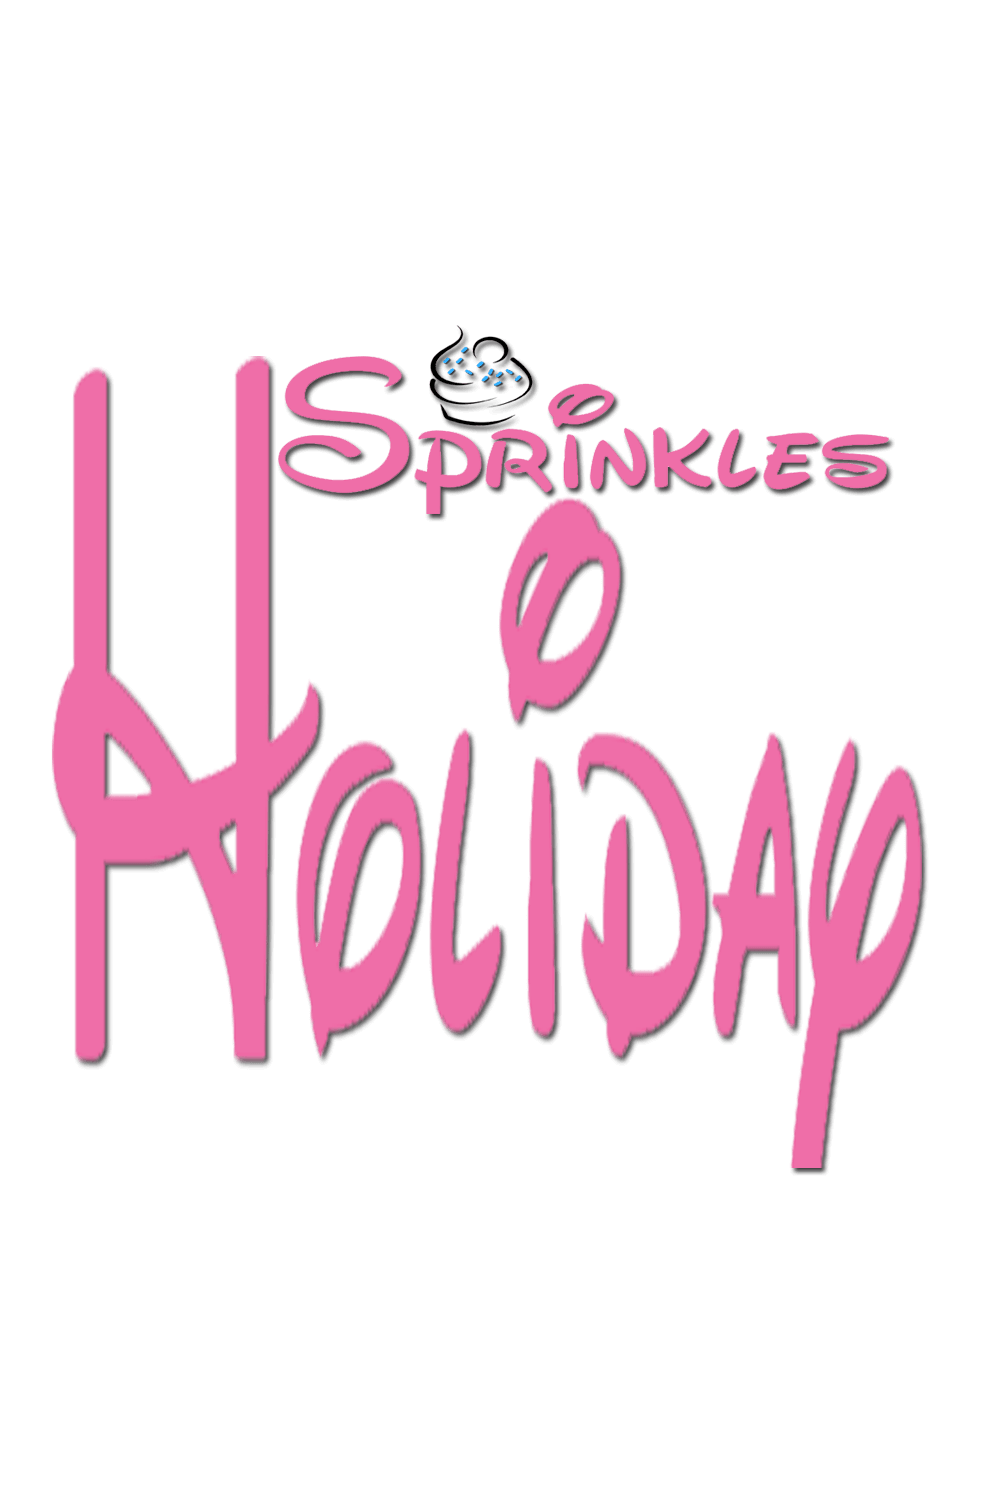 Holiday Sprinkles